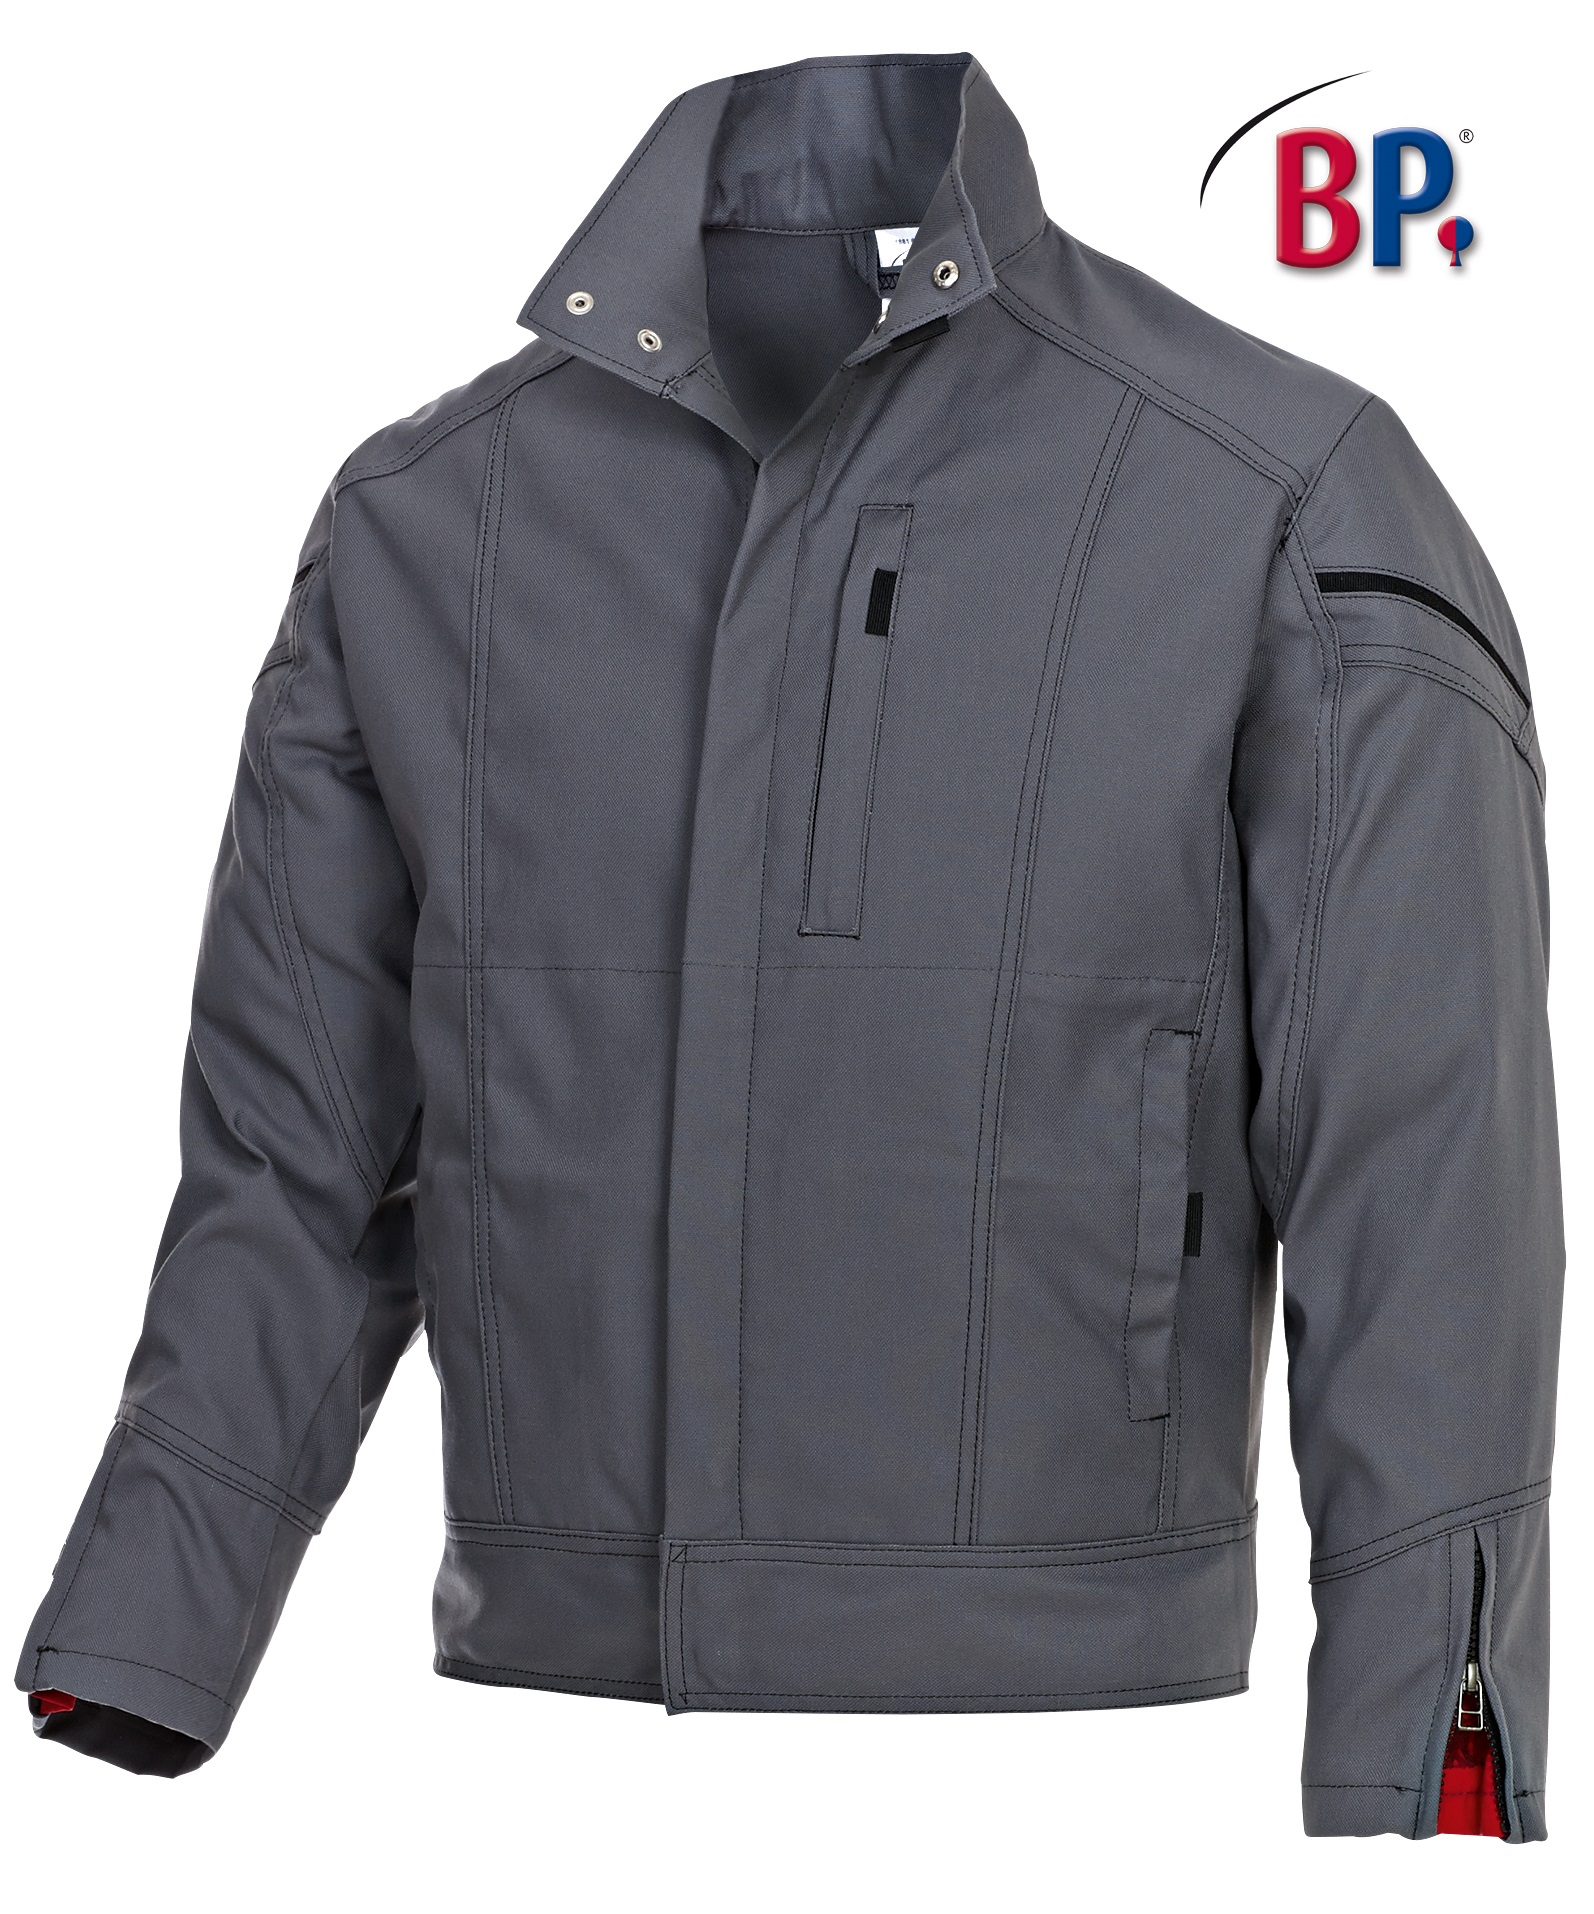 BP Arbeitsjacke Berufsjacke Schutzjacke Arbeitskleidung Berufskleidung dunkelgrau schwarz ca 300g